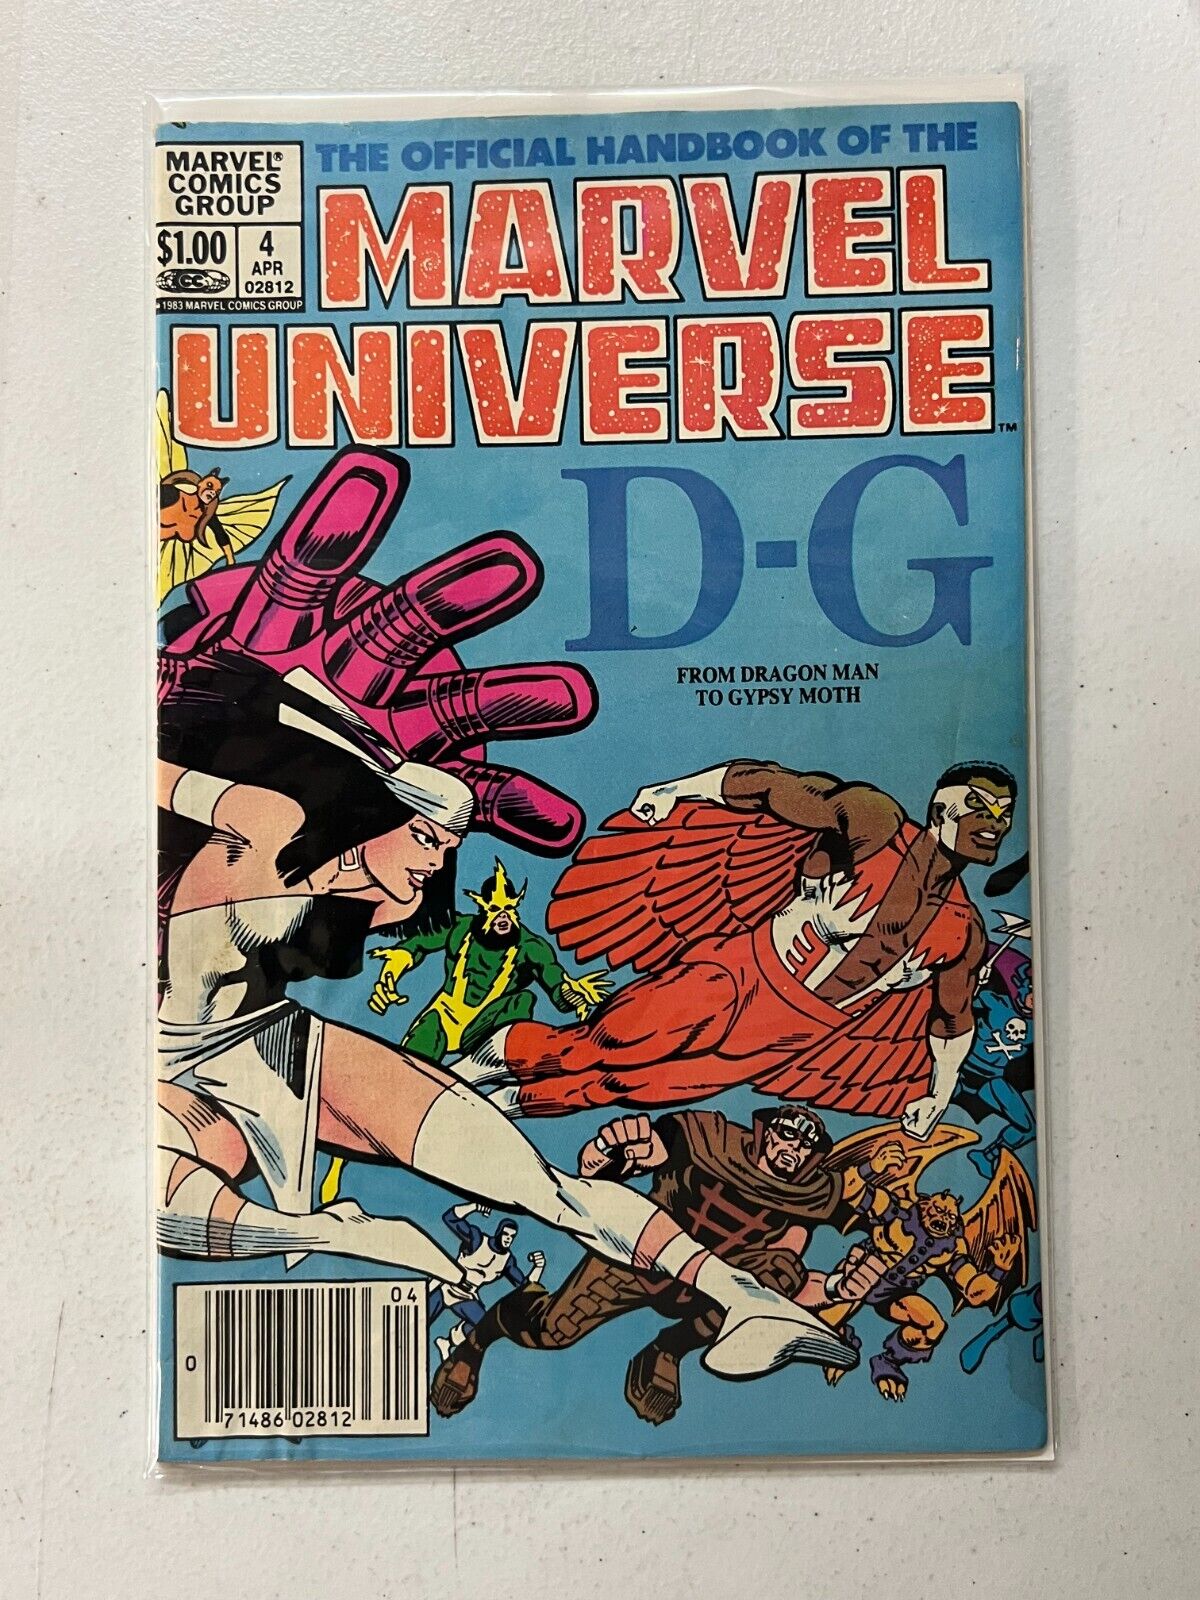 The Official Handbook Of The Marvel Universe D-G #4 - April 1983 / Marvel Comics